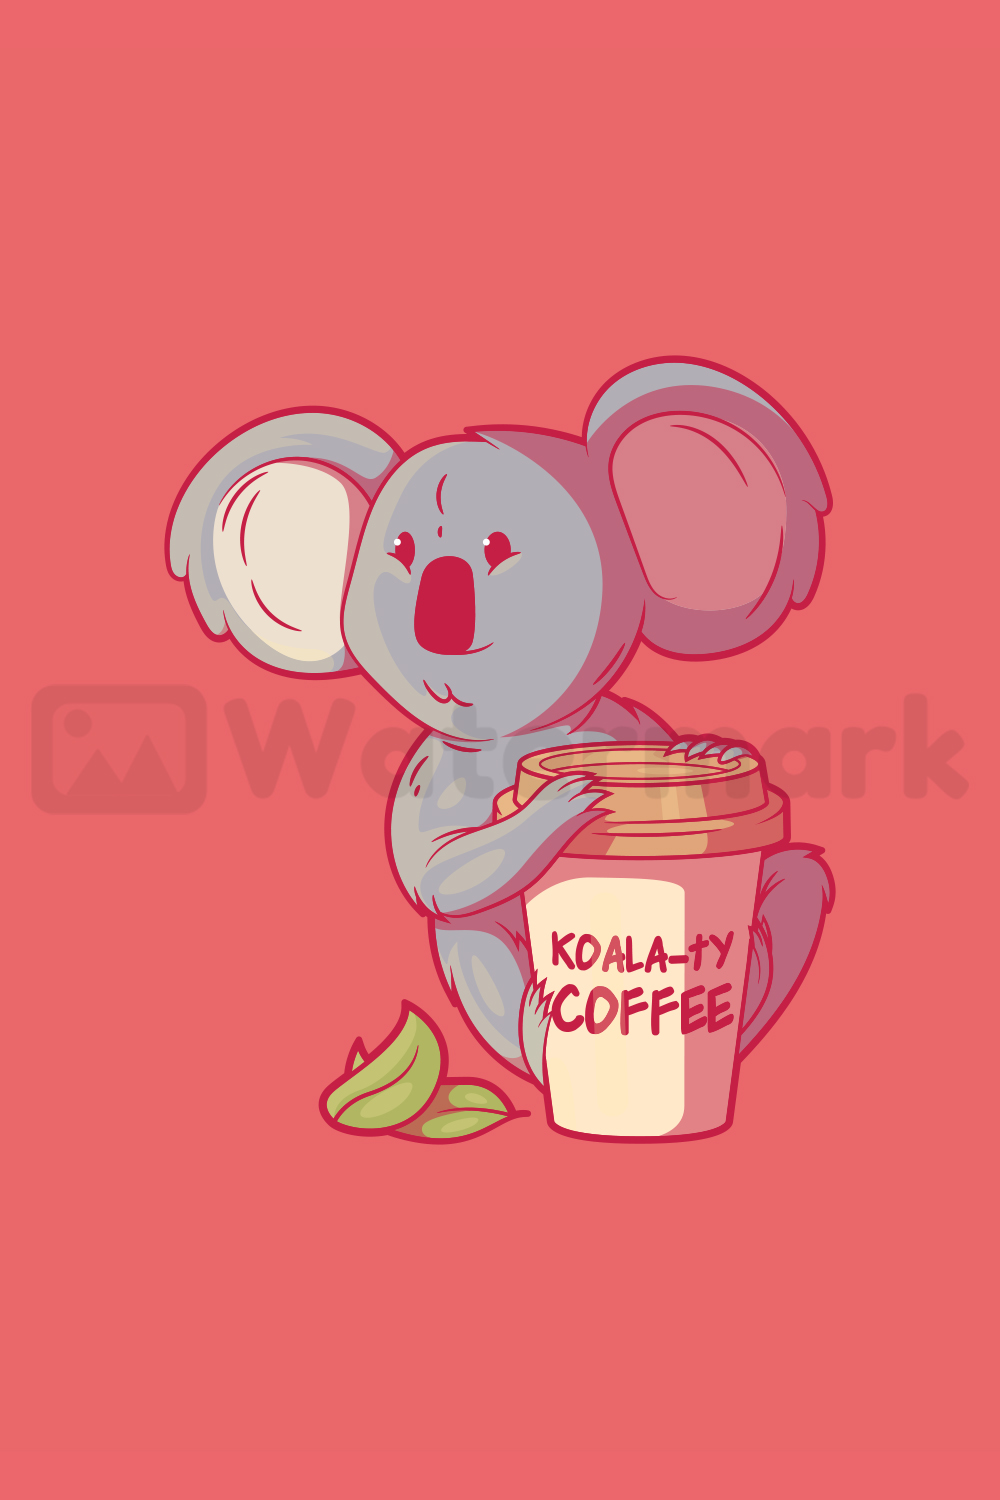 Koala_ty Coffee! pinterest preview image.